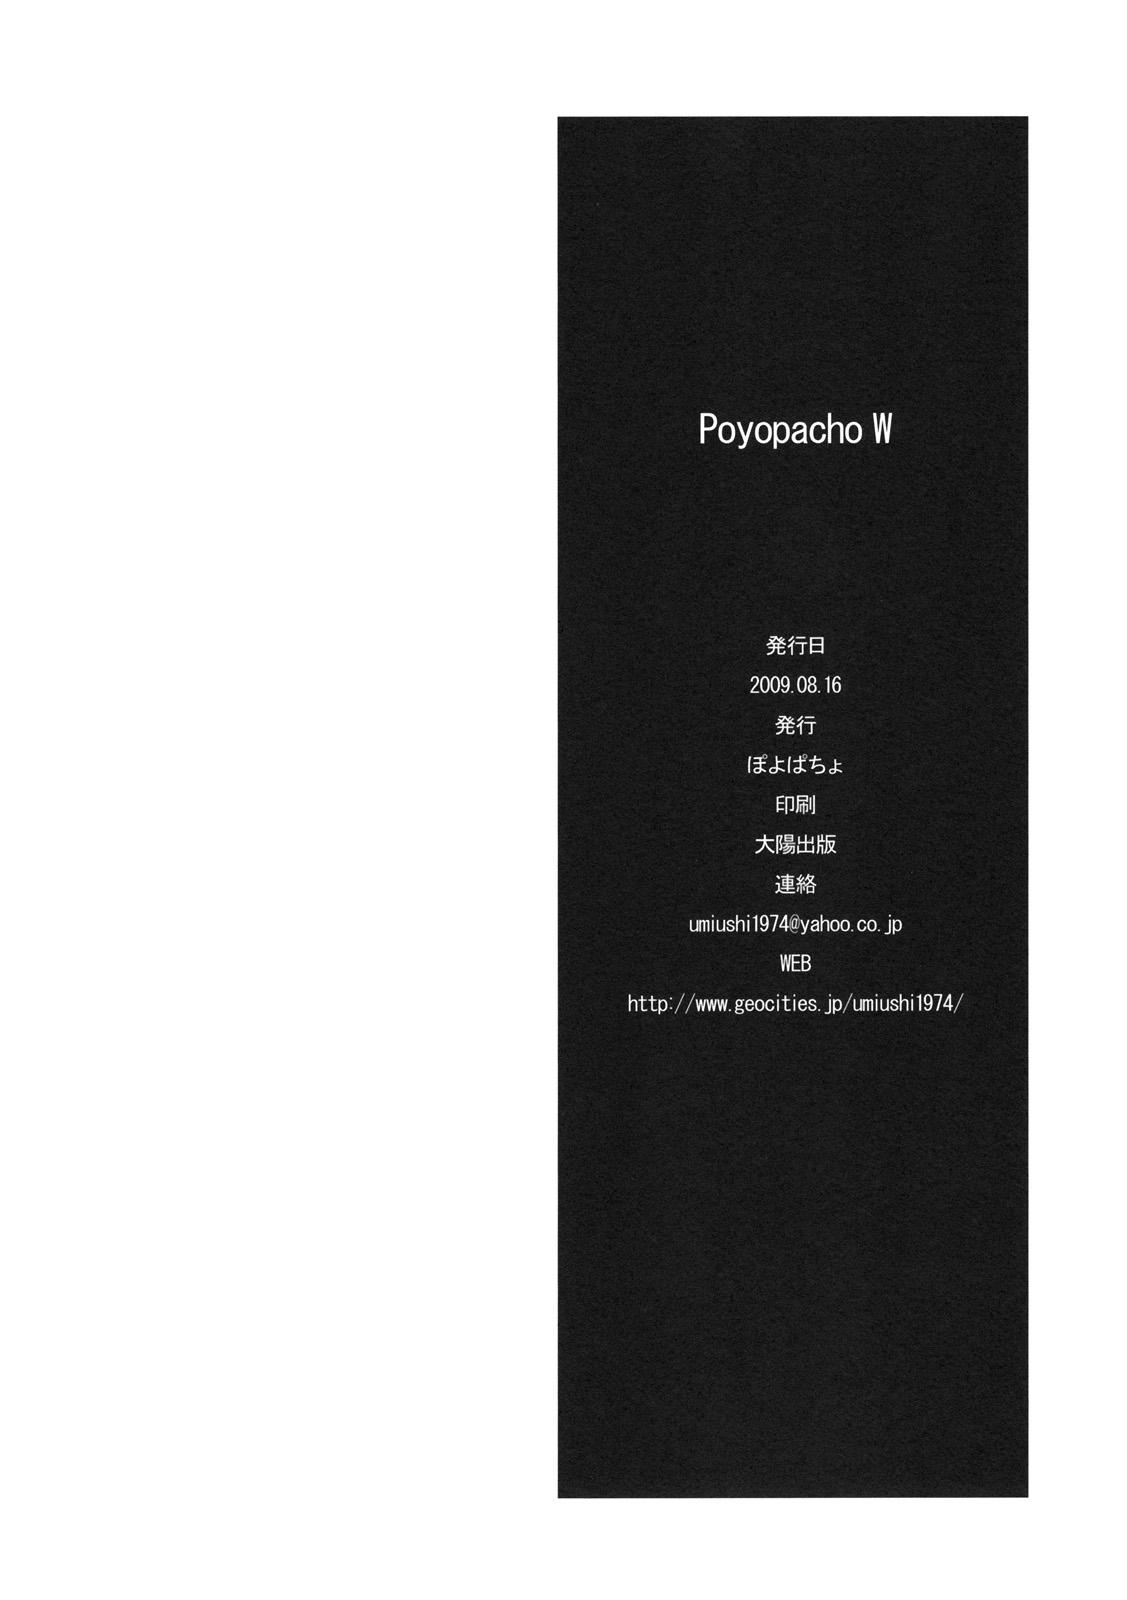 Flash Poyopacho W - Neon genesis evangelion Oldvsyoung - Page 25